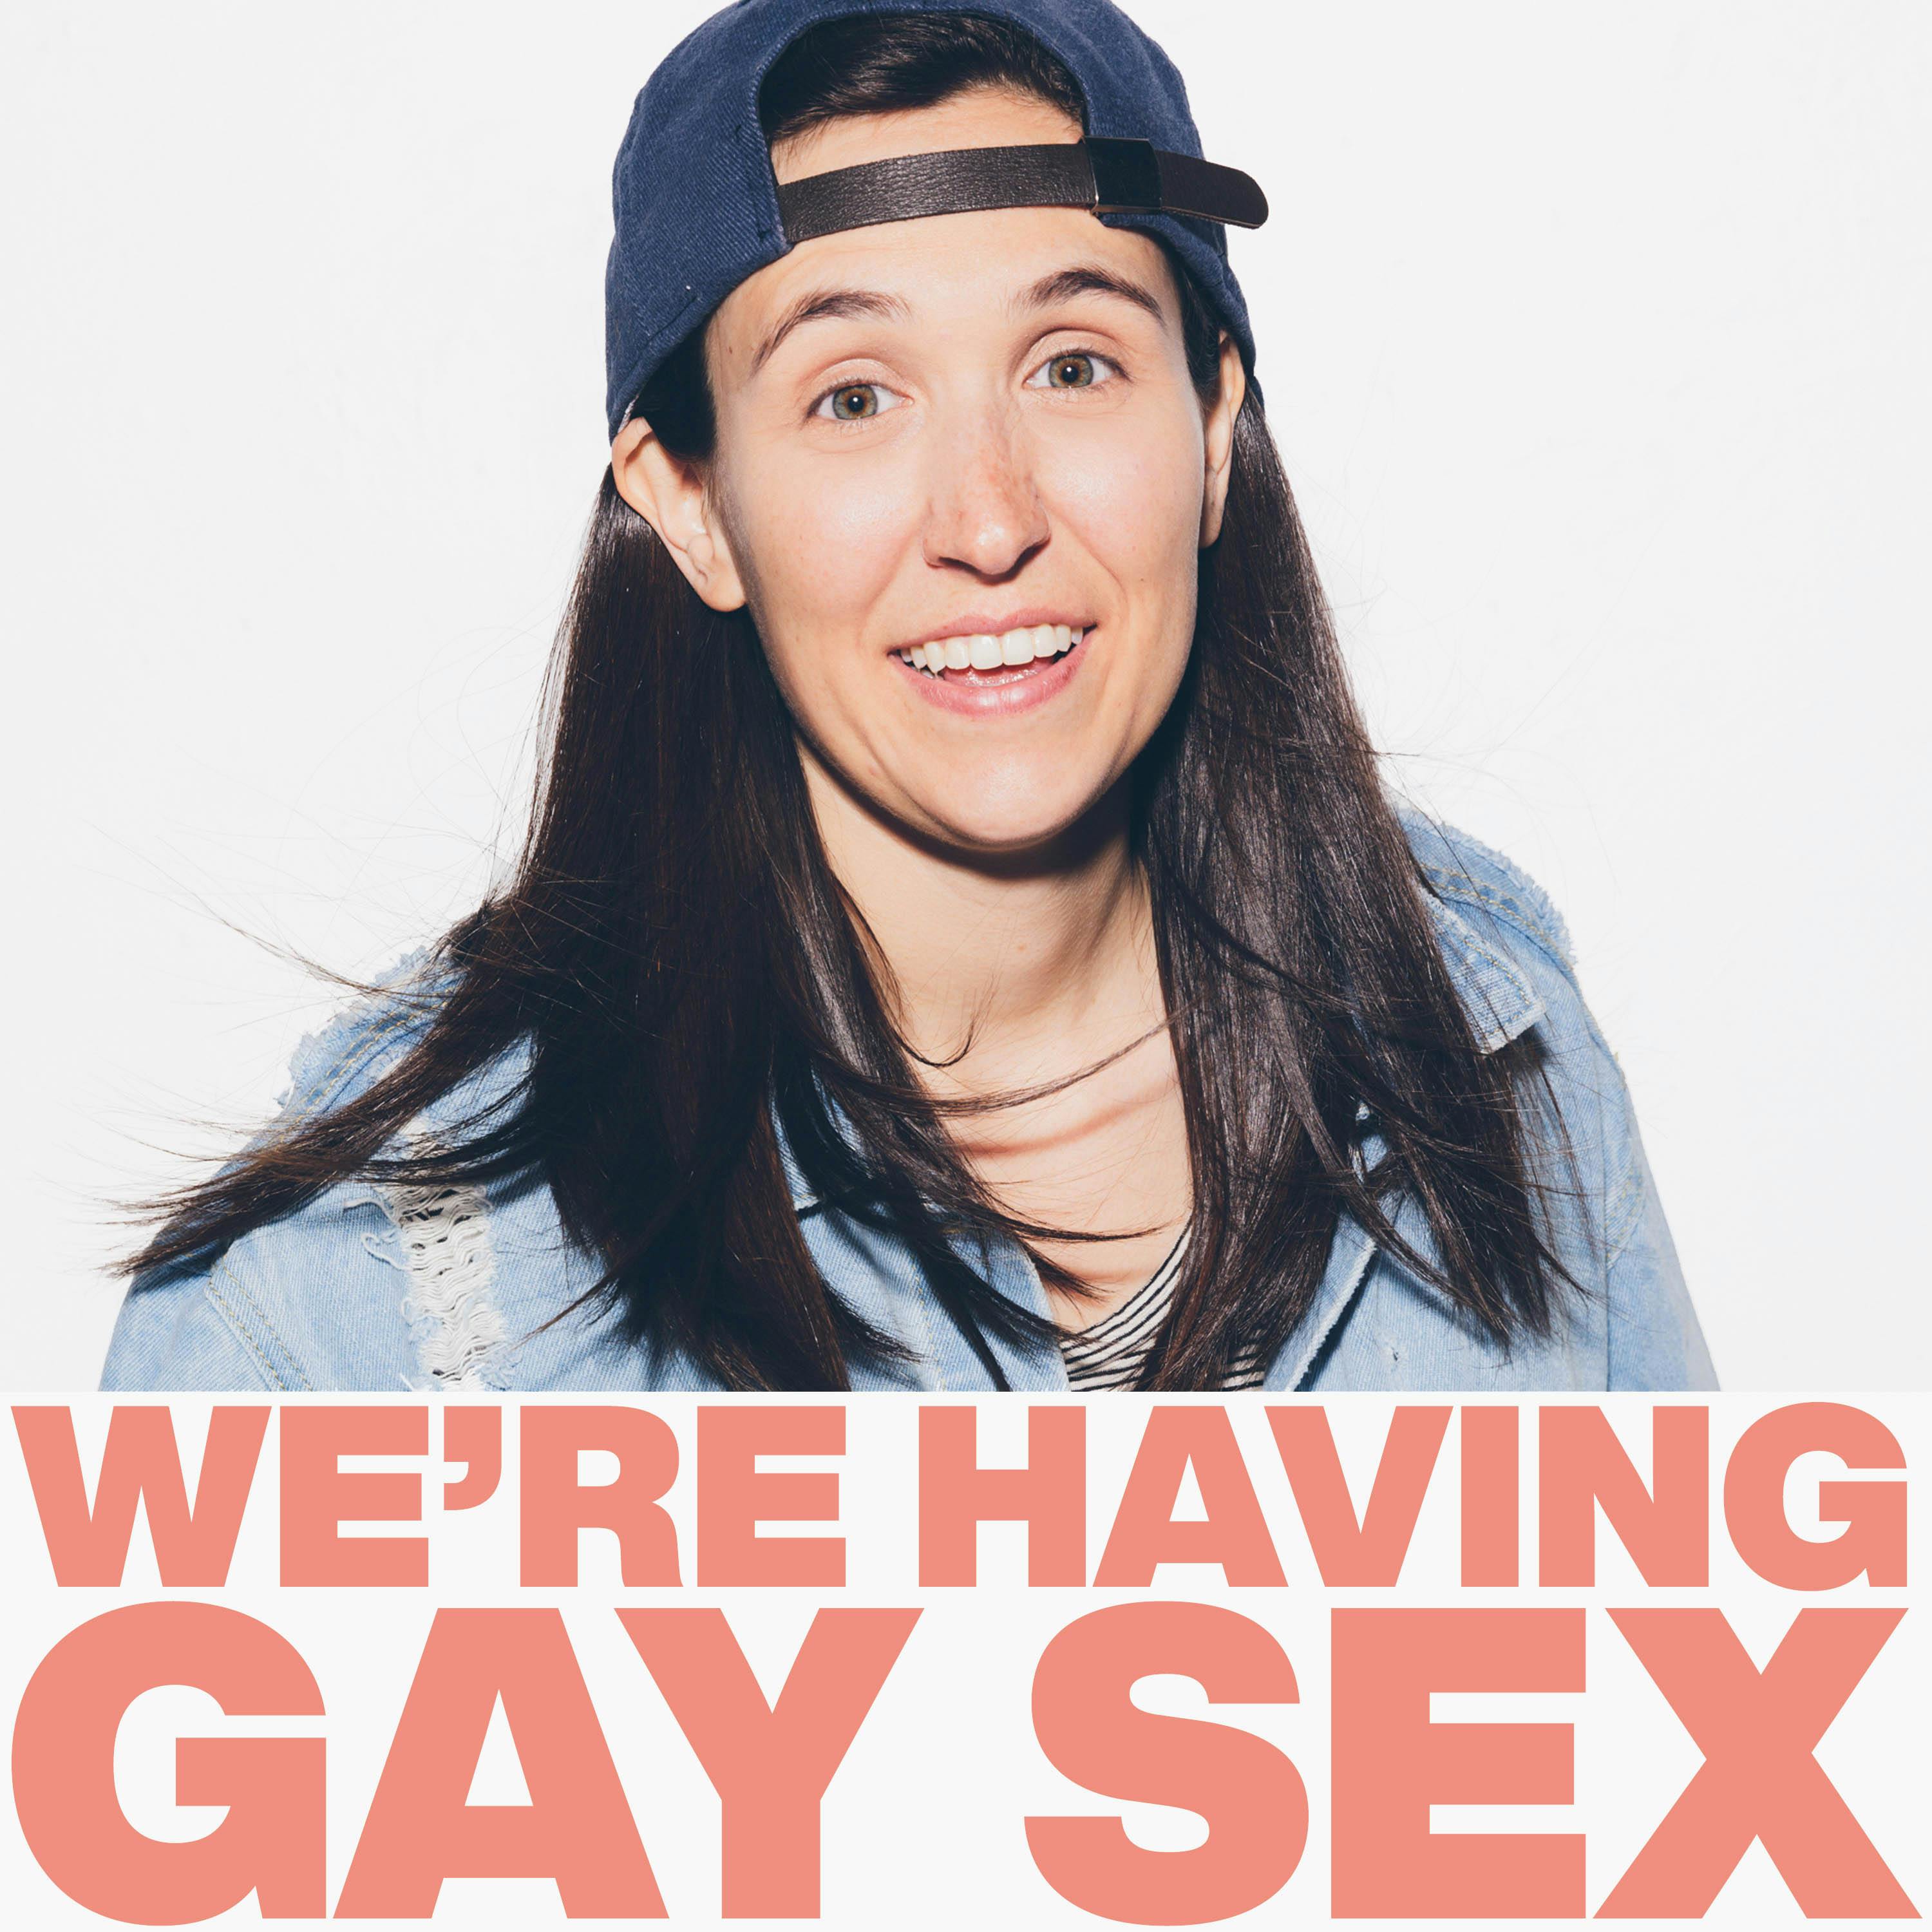 We're Having Gay Sex - We Make Georgia Bridgers Cry (Totally Not Clickbait)